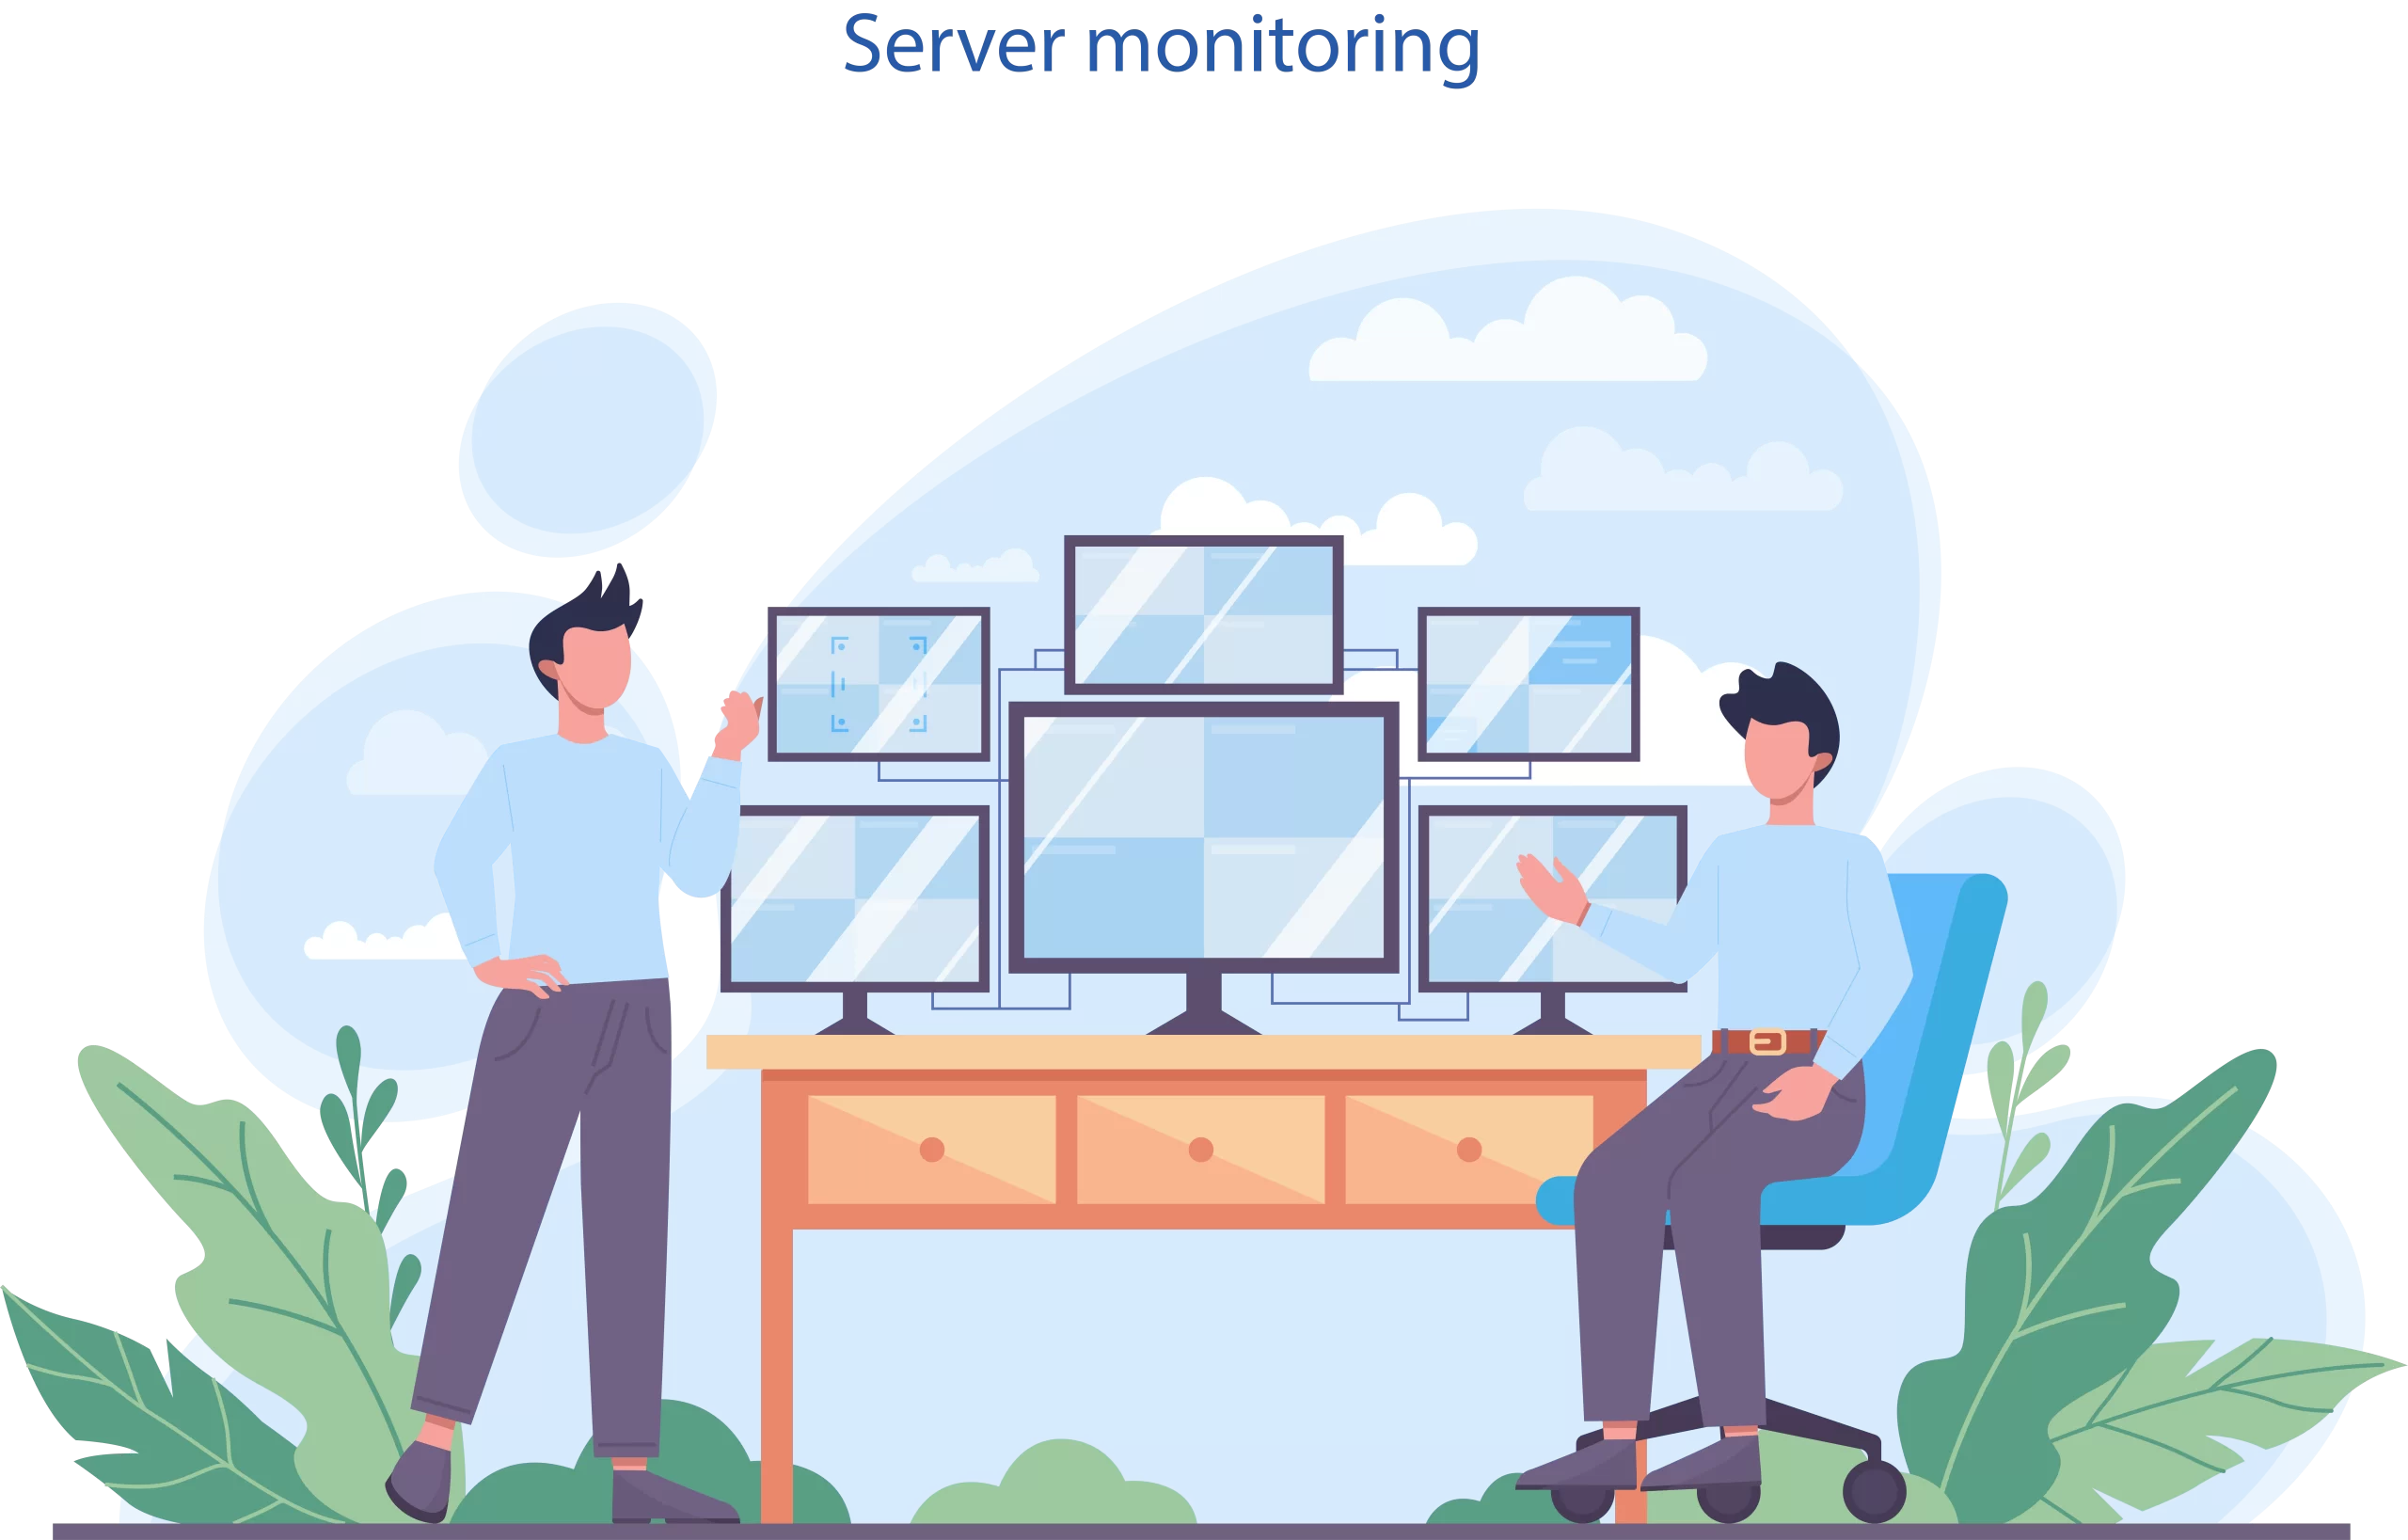 Server monitoring